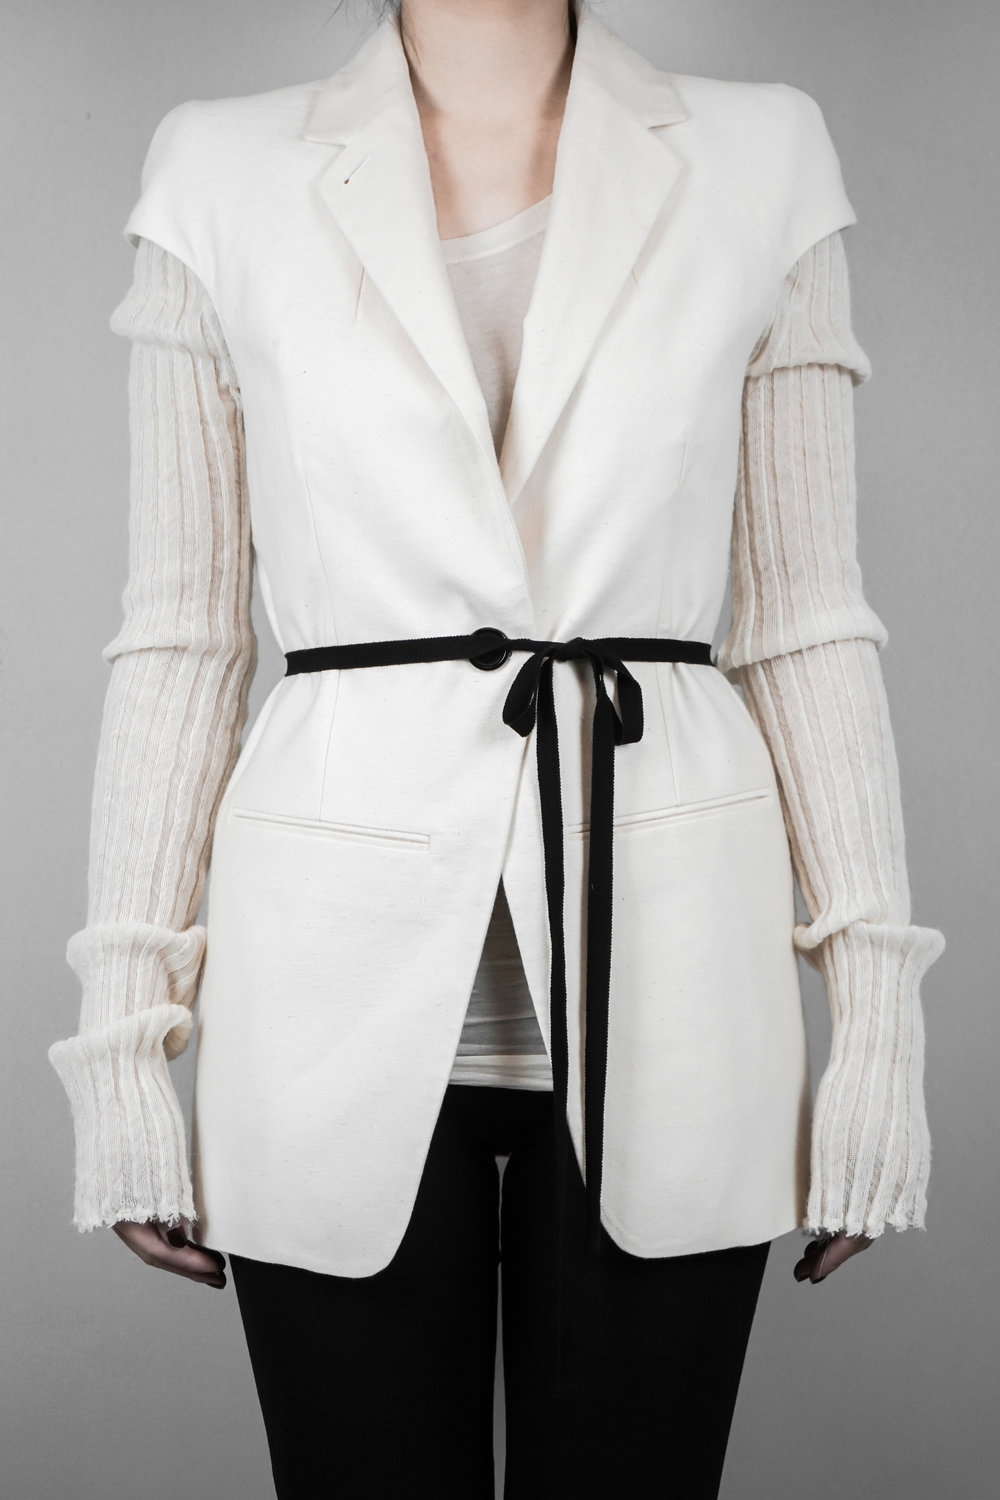 Ann Demeulemeester – Womens – Mid-Length Coat – Cream – Cotton / Linen / Mohair – V-Neck – Long Knitted Sleeves – Front Button Fastening